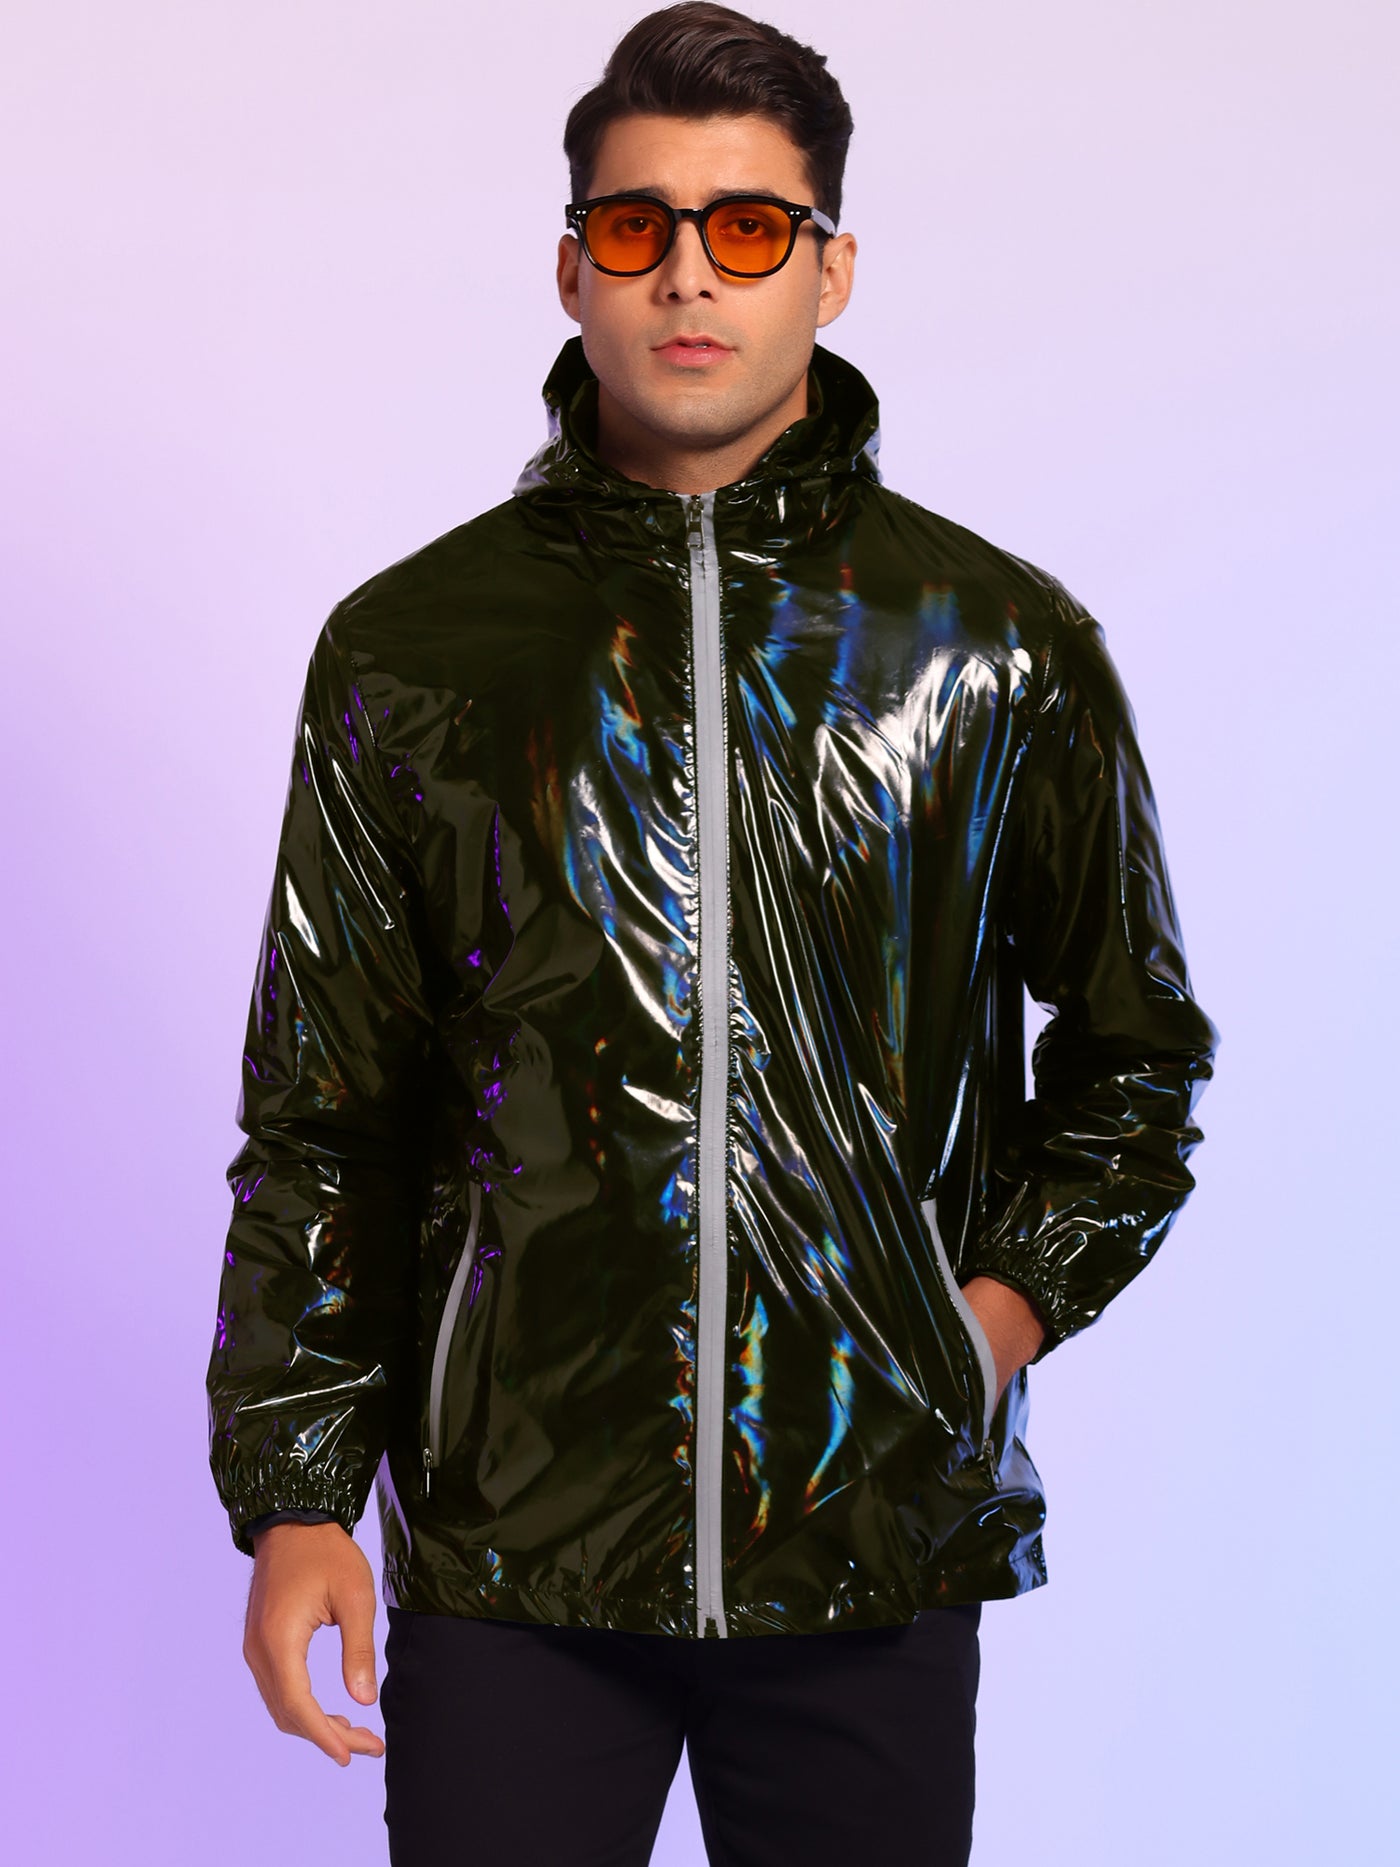 Bublédon Metallic Jacket for Men's Solid Zipper Sparkle Shiny Holographic Hooded Windbreaker